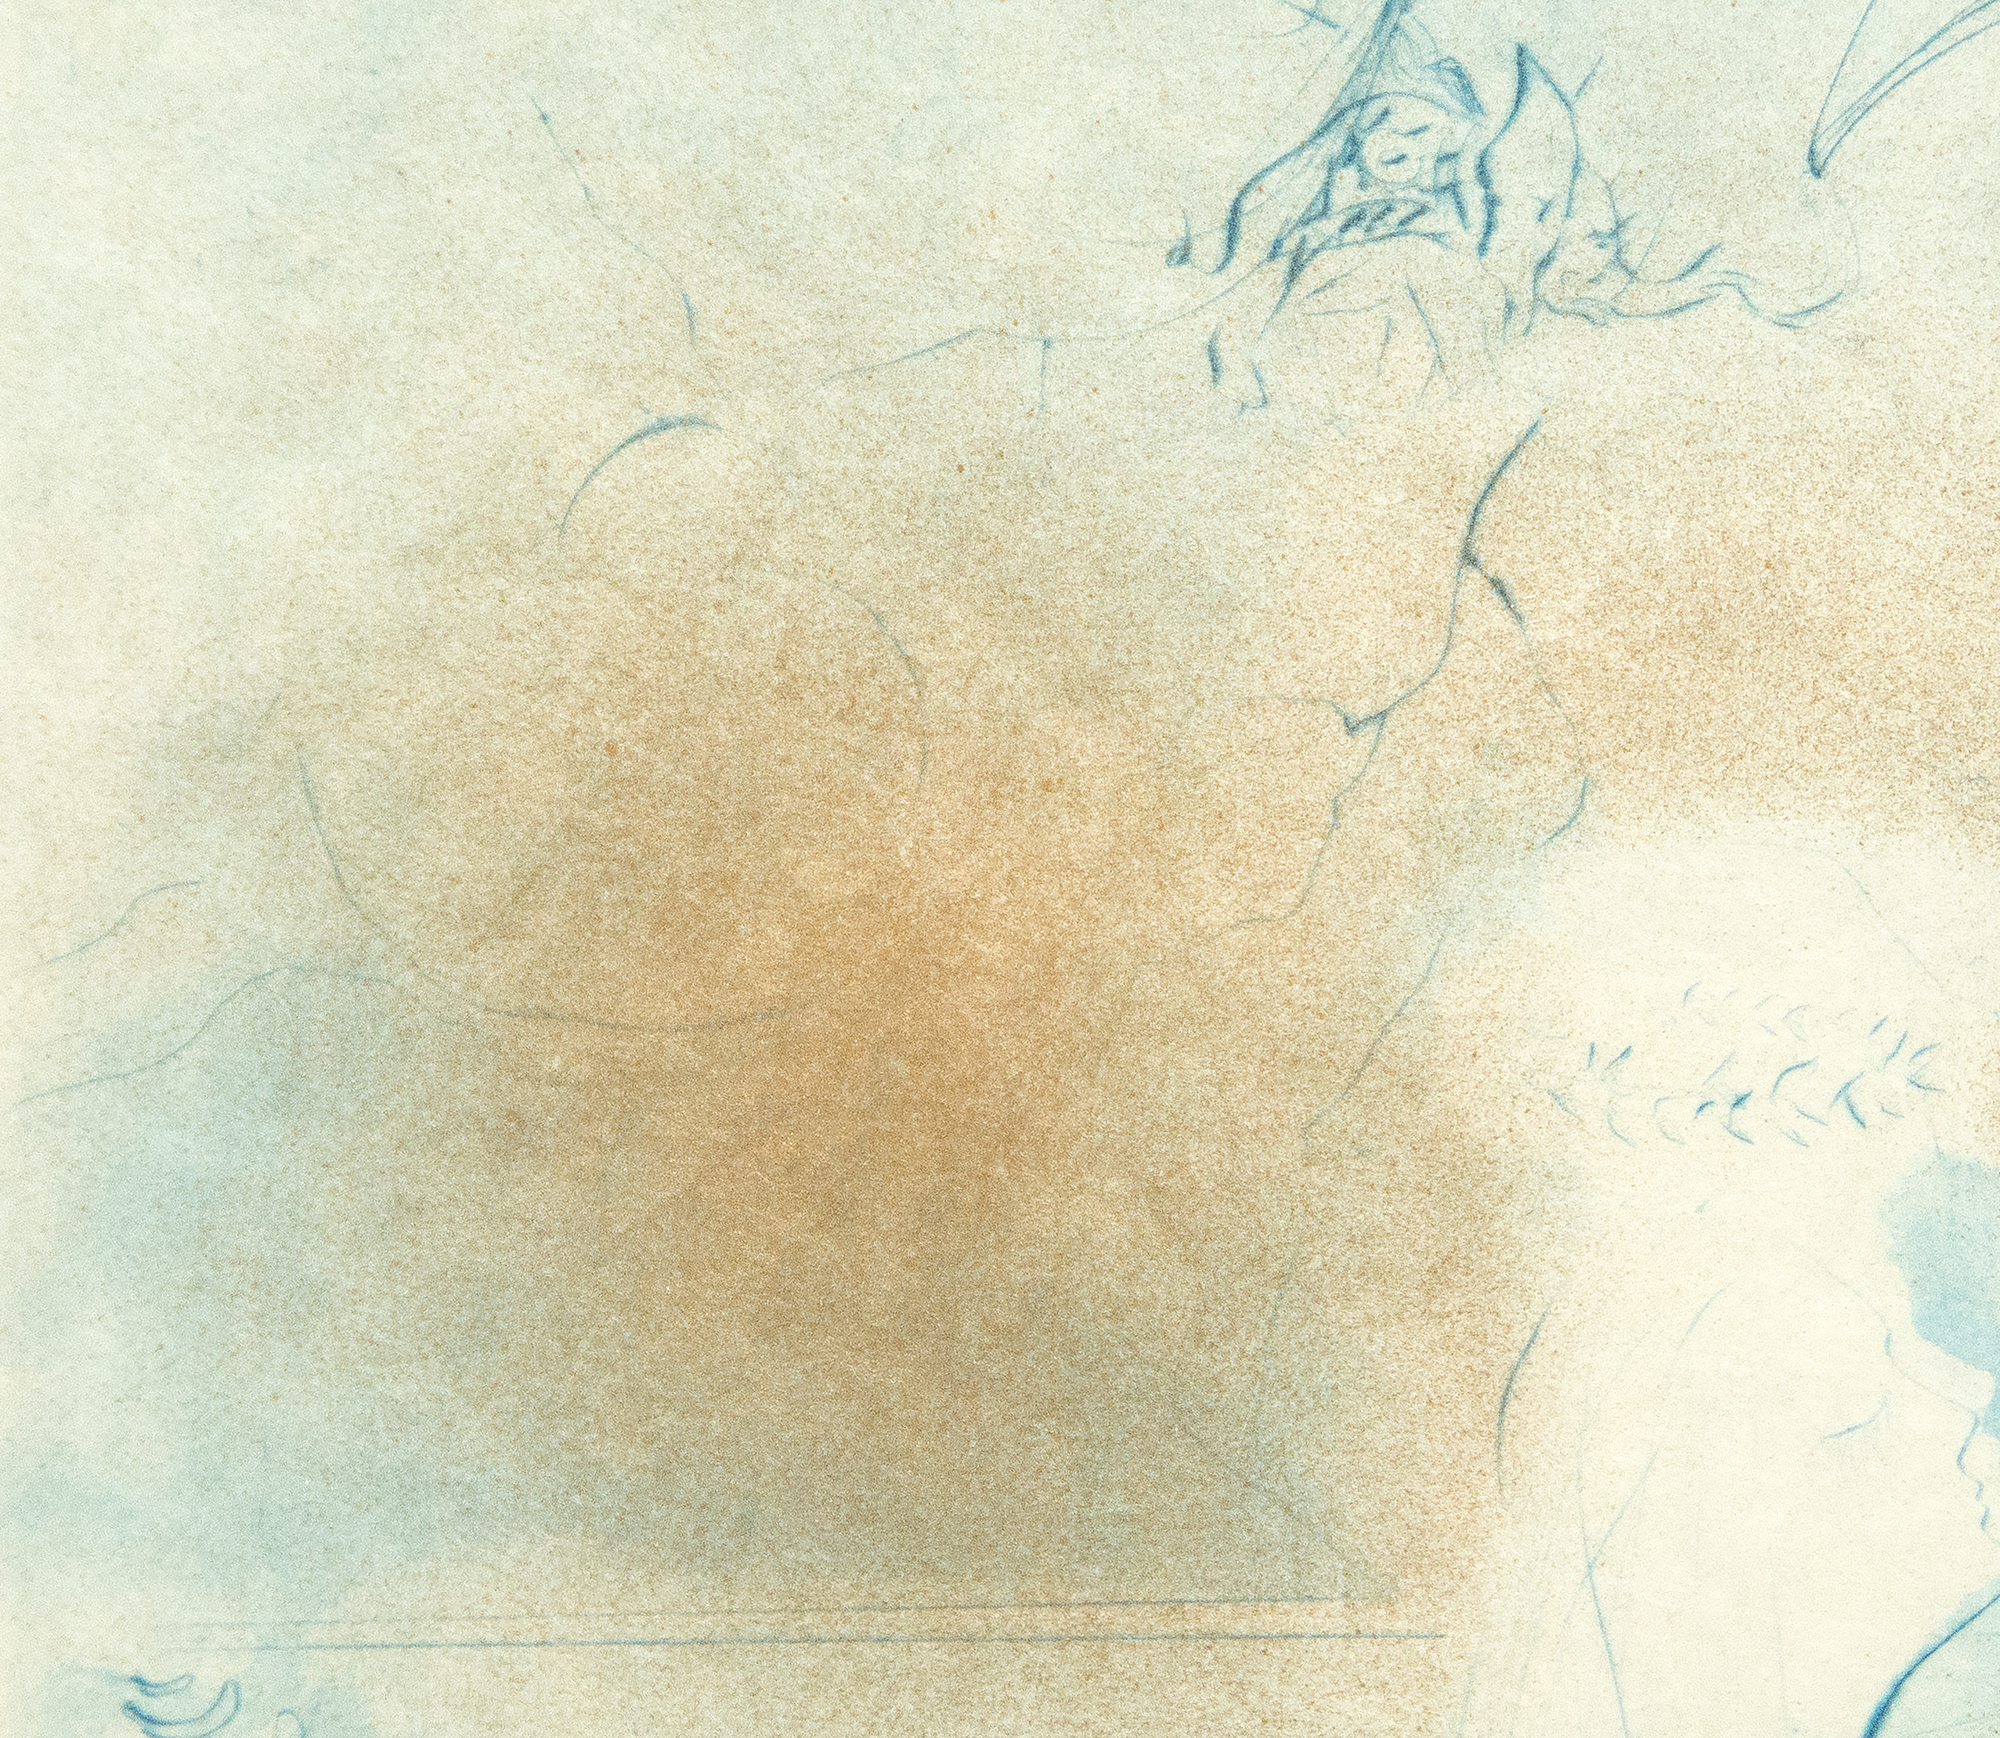 SALVADOR DALI - Le Femme au Coussin - etching - 15 3/4 x 12 1/2 in.